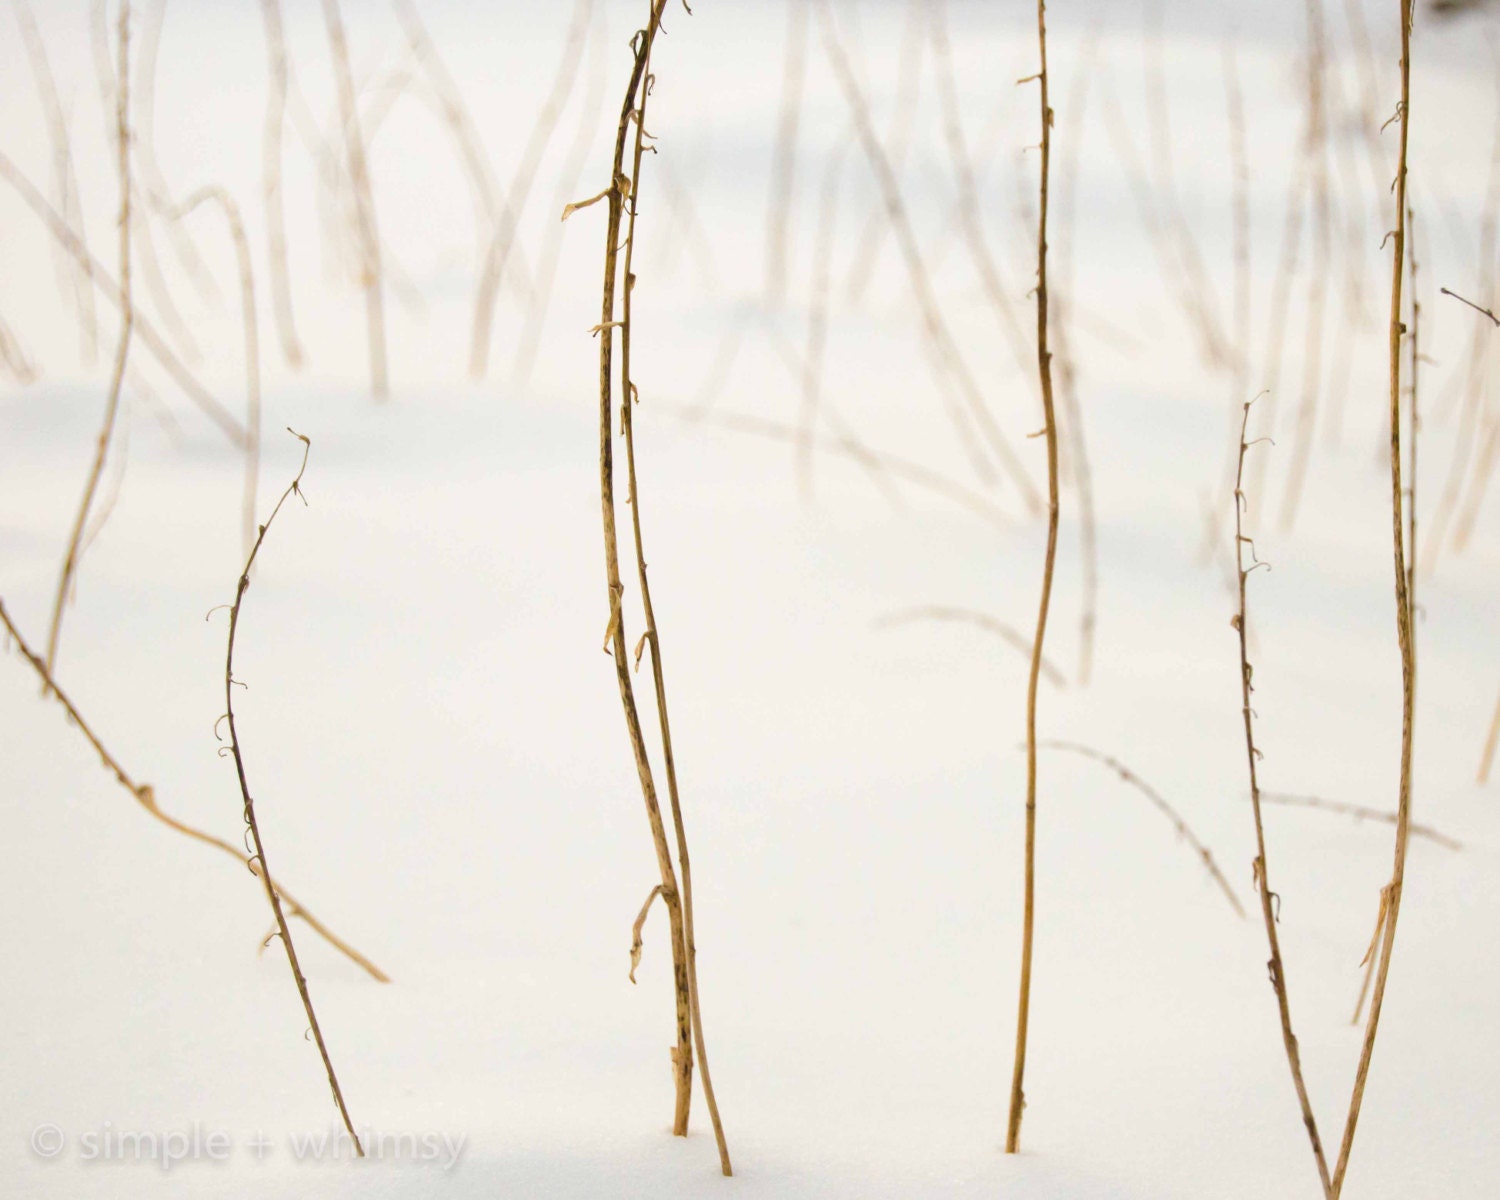 polar vortex : nature photography, winter photography, branches, snow, canvas print, home decor, wall art - SimpleWhimsyPhotos